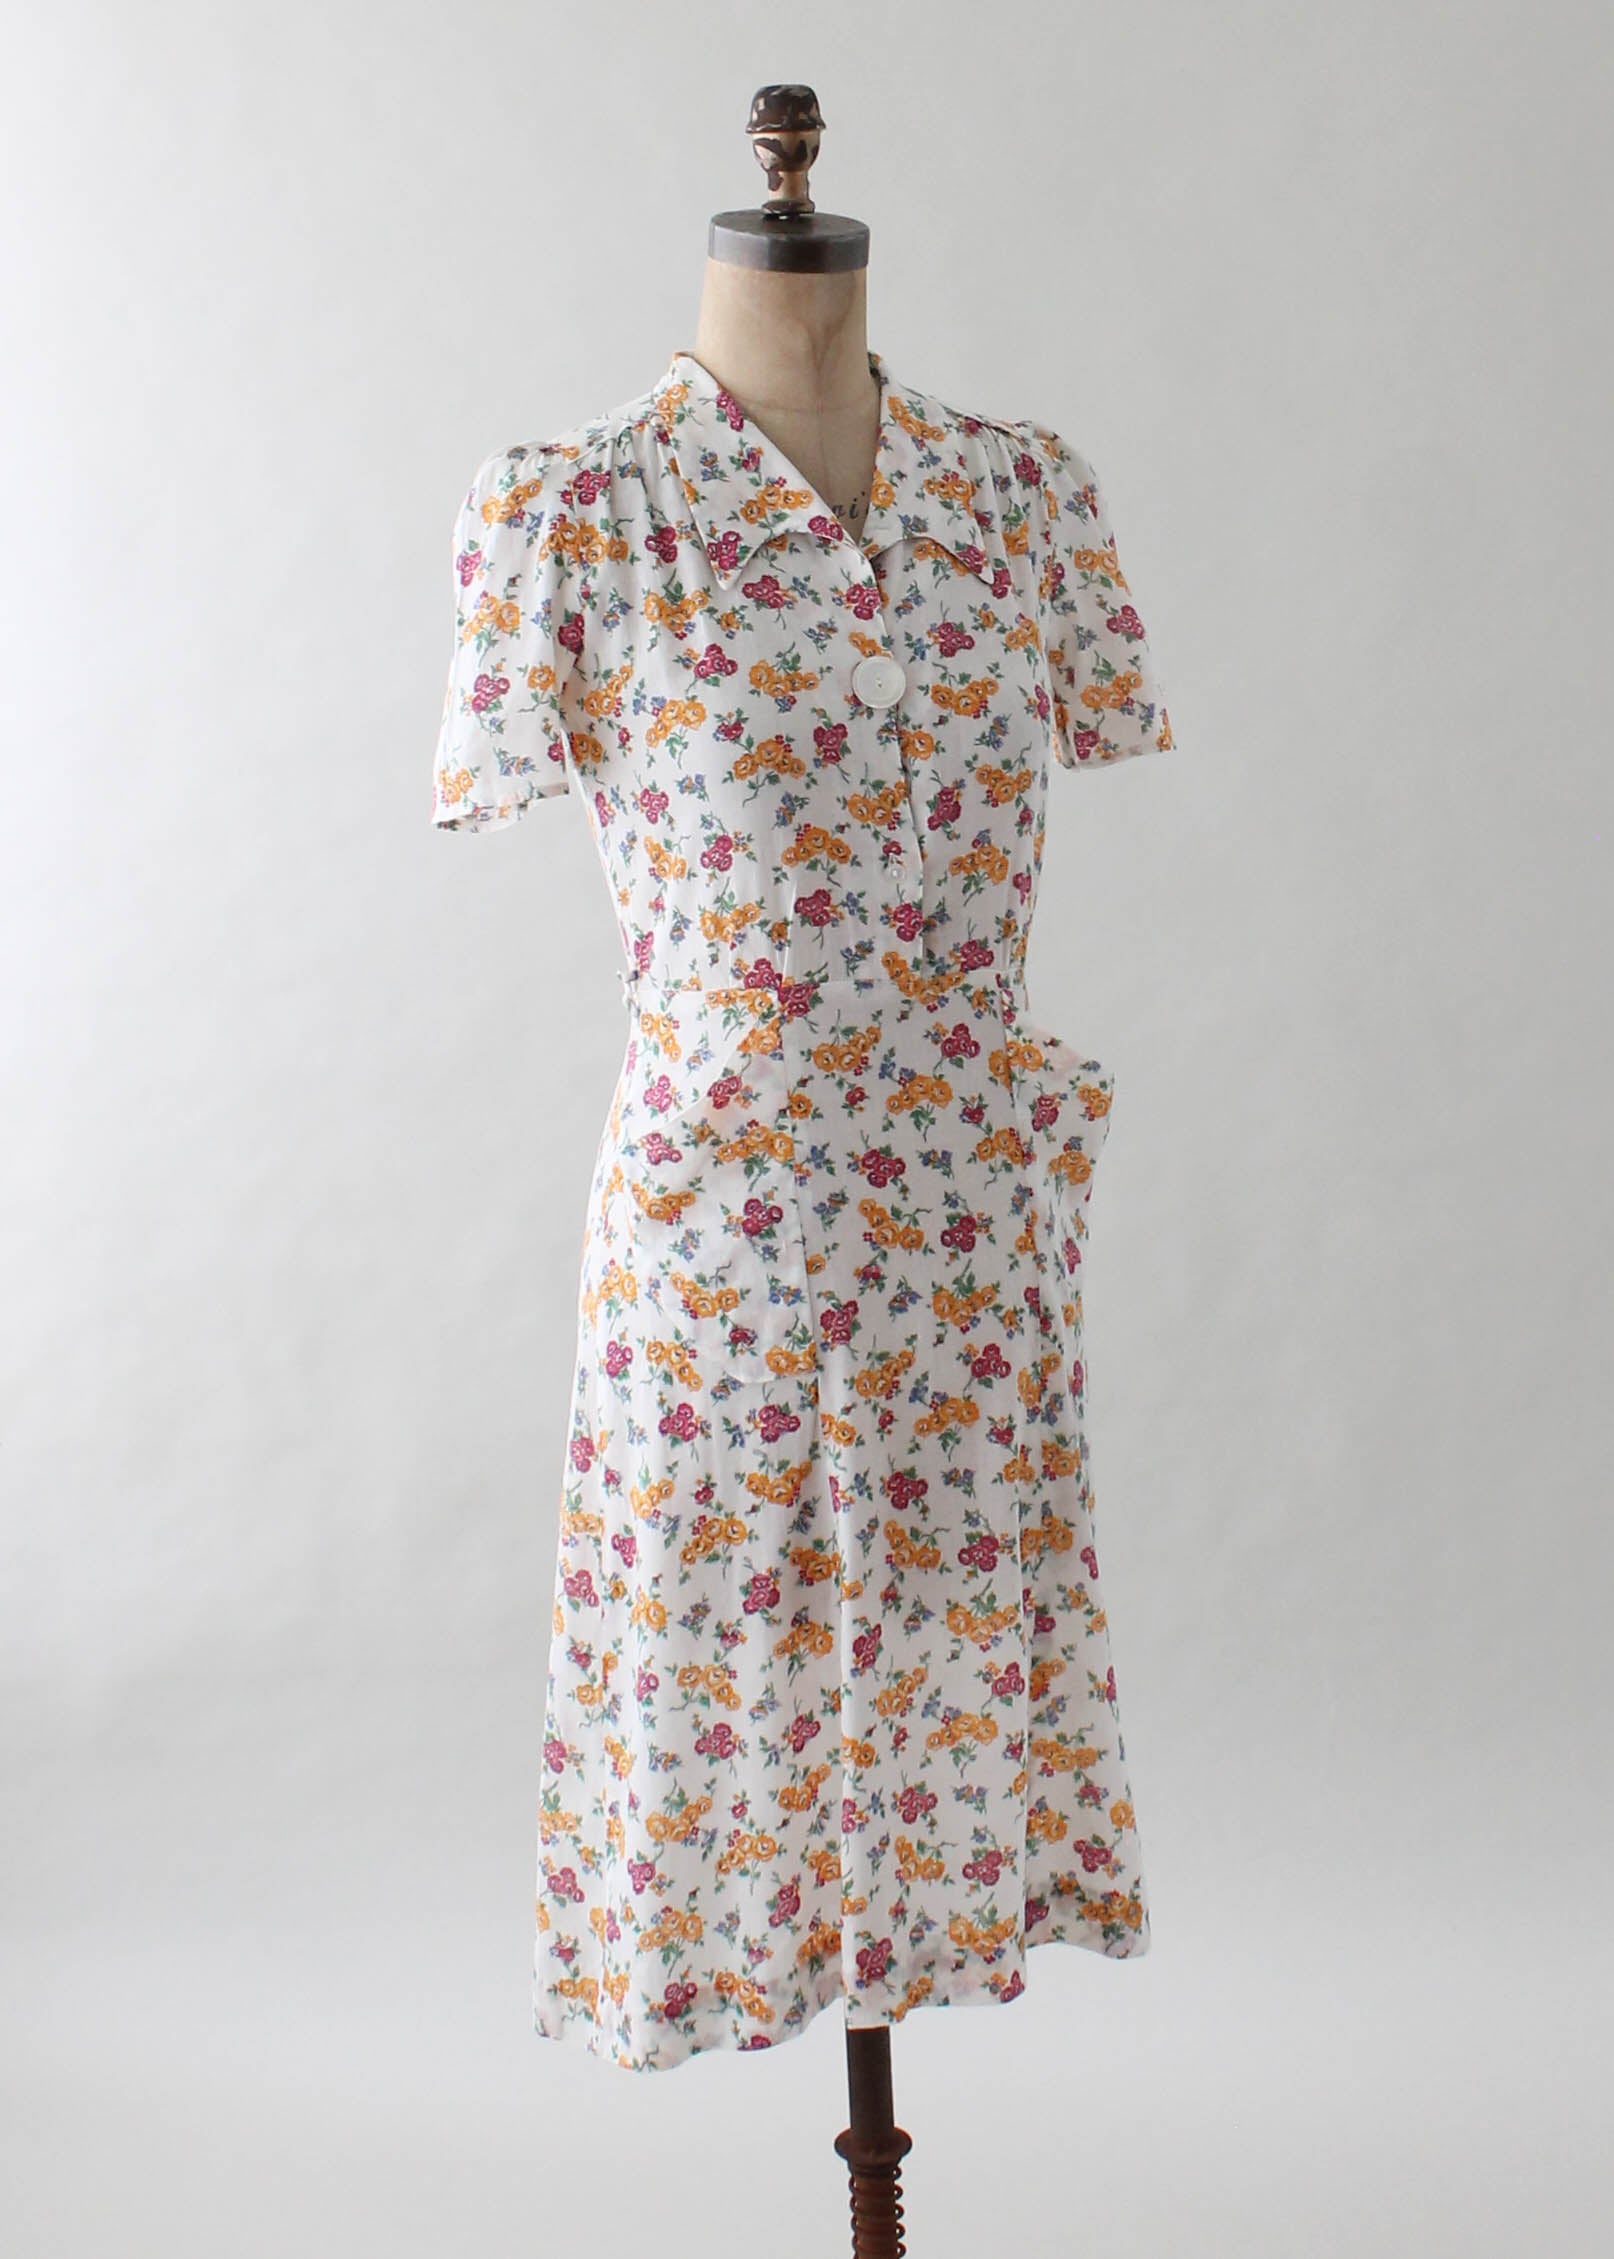 Vintage 1930s Floral Cotton Shirtwaist Day Dress - Raleigh Vintage